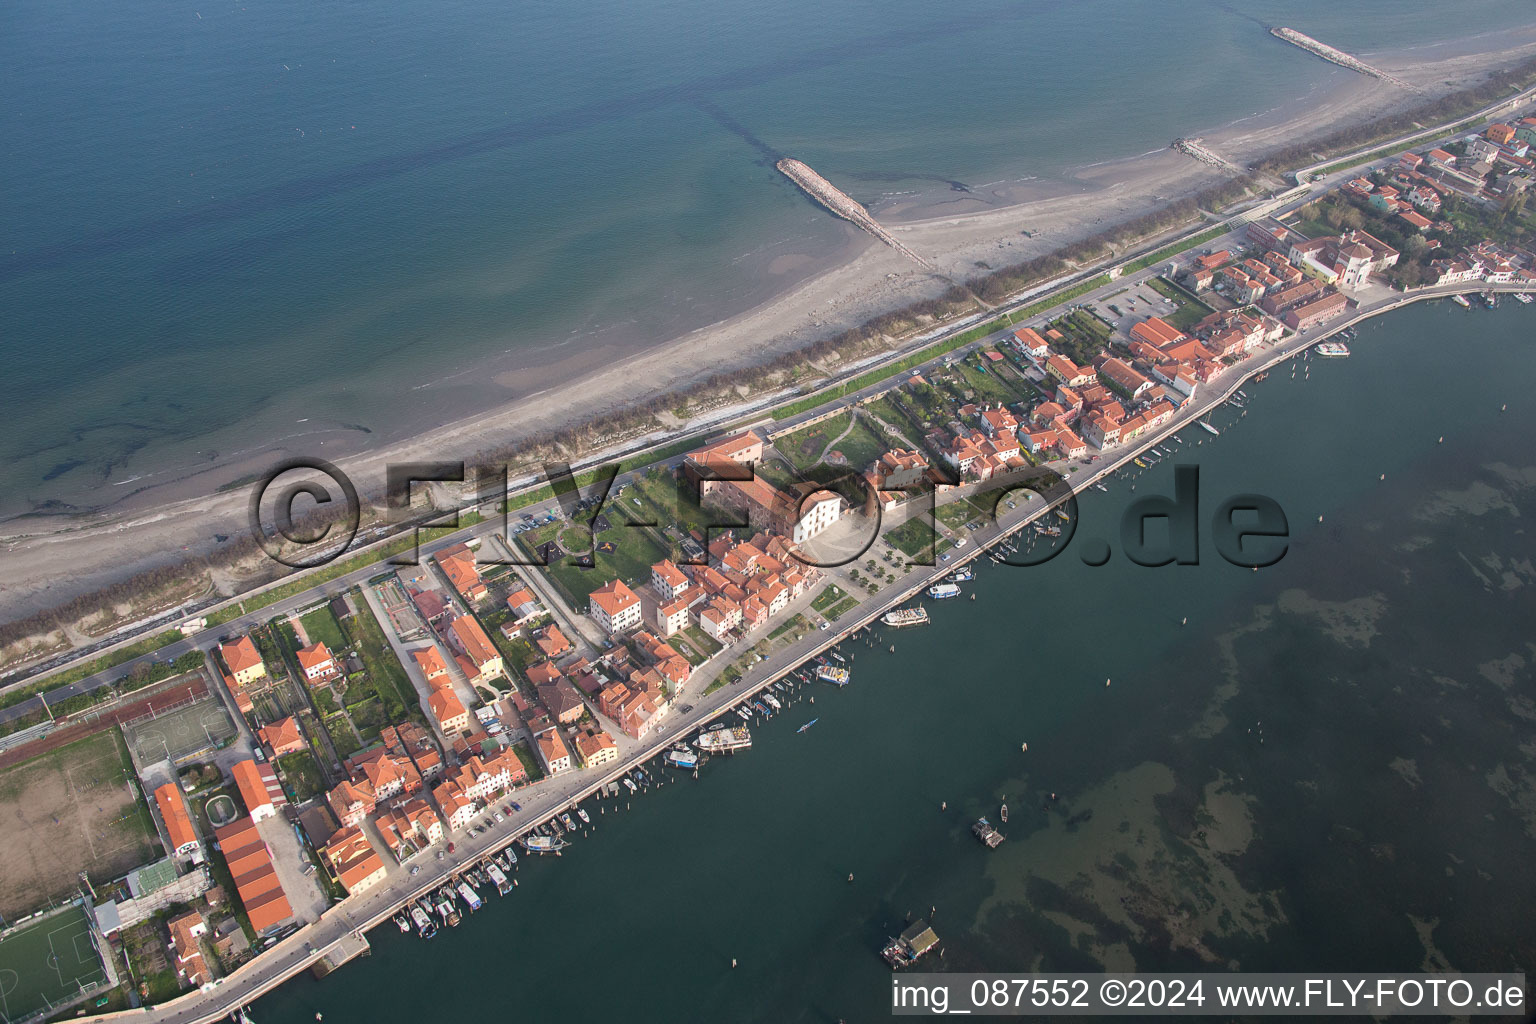 Oblique view of Townscape on the seacoast of Mediterranean Sea in San Vito in Veneto, Italy